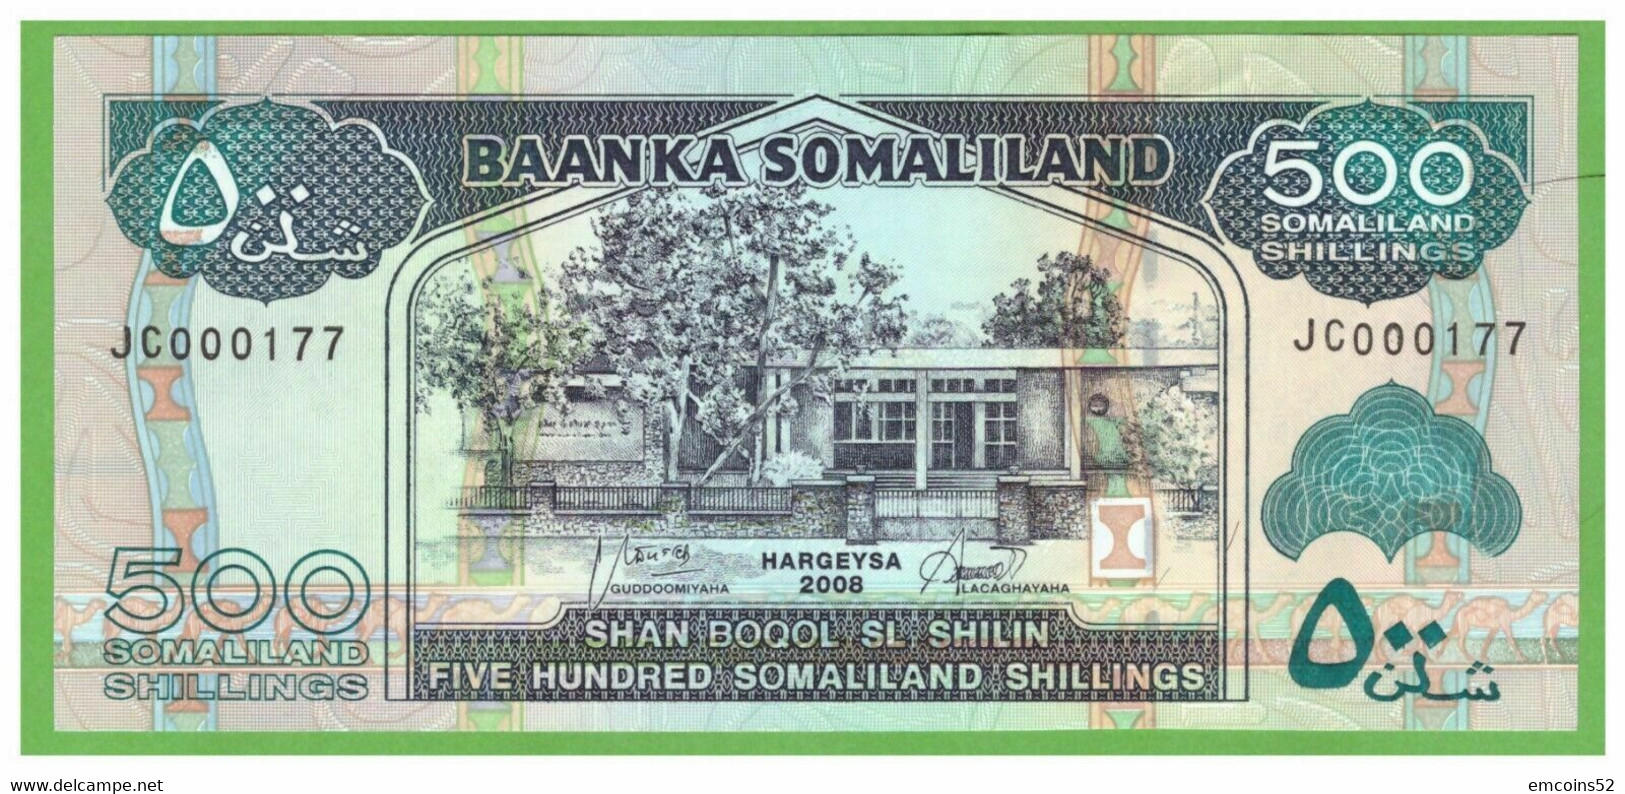 SOMALILAND 500 SHILLINGS 2008  P-6g  UNC  NUMBER 000177 - Somalie